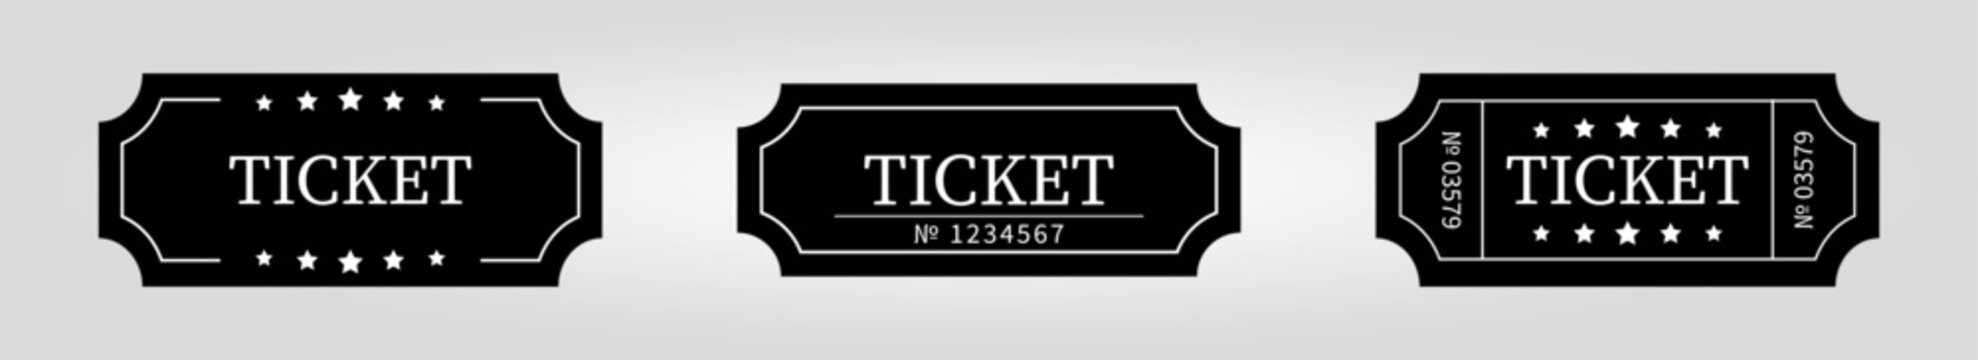 Set of ticket icons isolated on white background